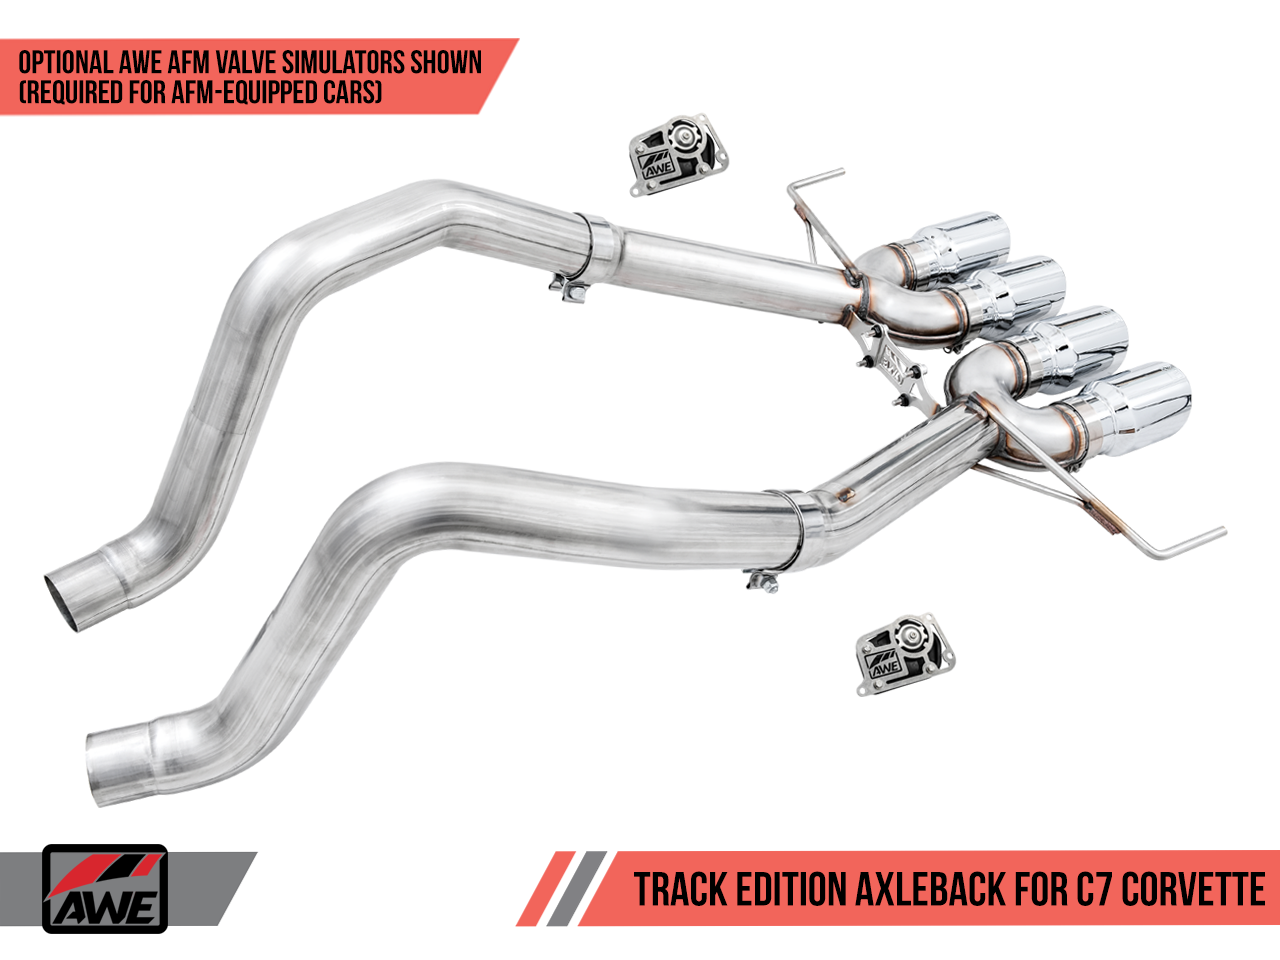 AWE Track Edition Axleback Exhaust for C7 Corvette Stingray / Z51 / Grand Sport / Z06 / ZR1 - Motorsports LA